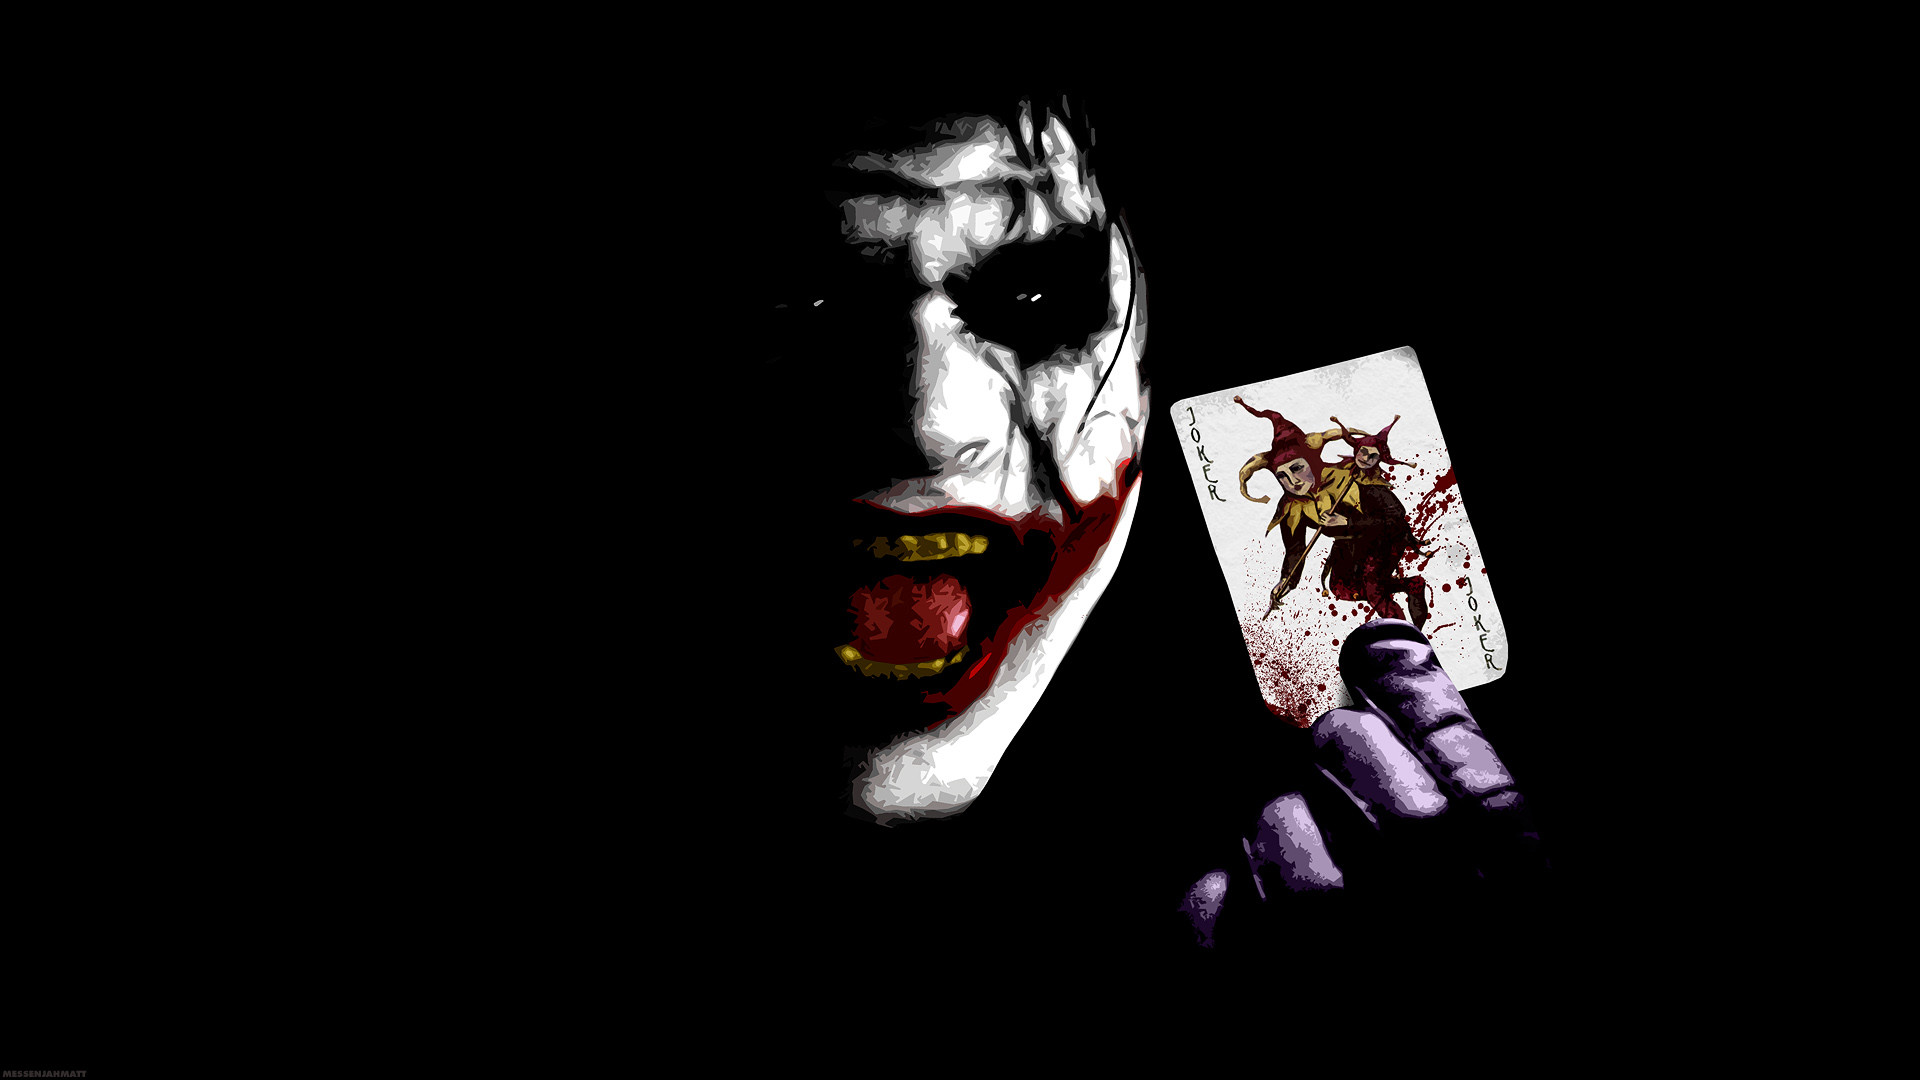 Cover art Joker Wallpapers HD Pinterest Joker, Apps and Android apps